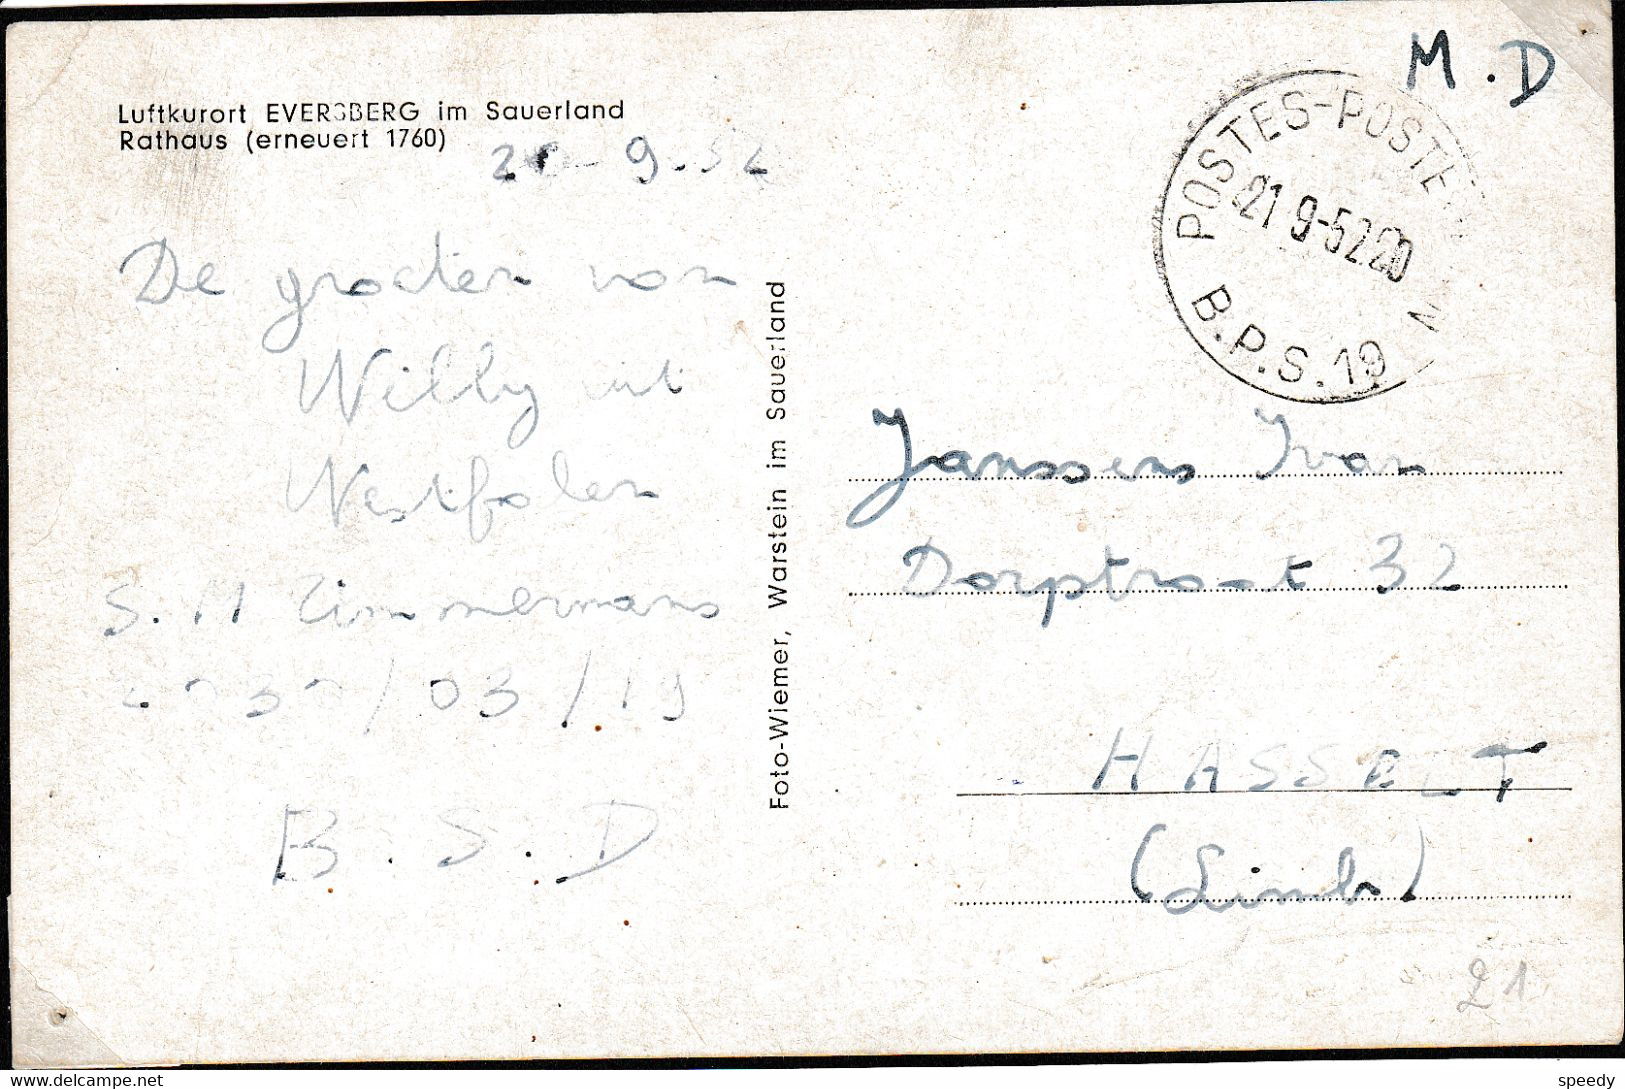 BZLGIË : MANEUVERS 1952 (HOLDFAST) ZK (Eversberg) "MD"  " B. P. S. 19 / 21.5.52" (adres : 2030/03/19) - Marques D'armées